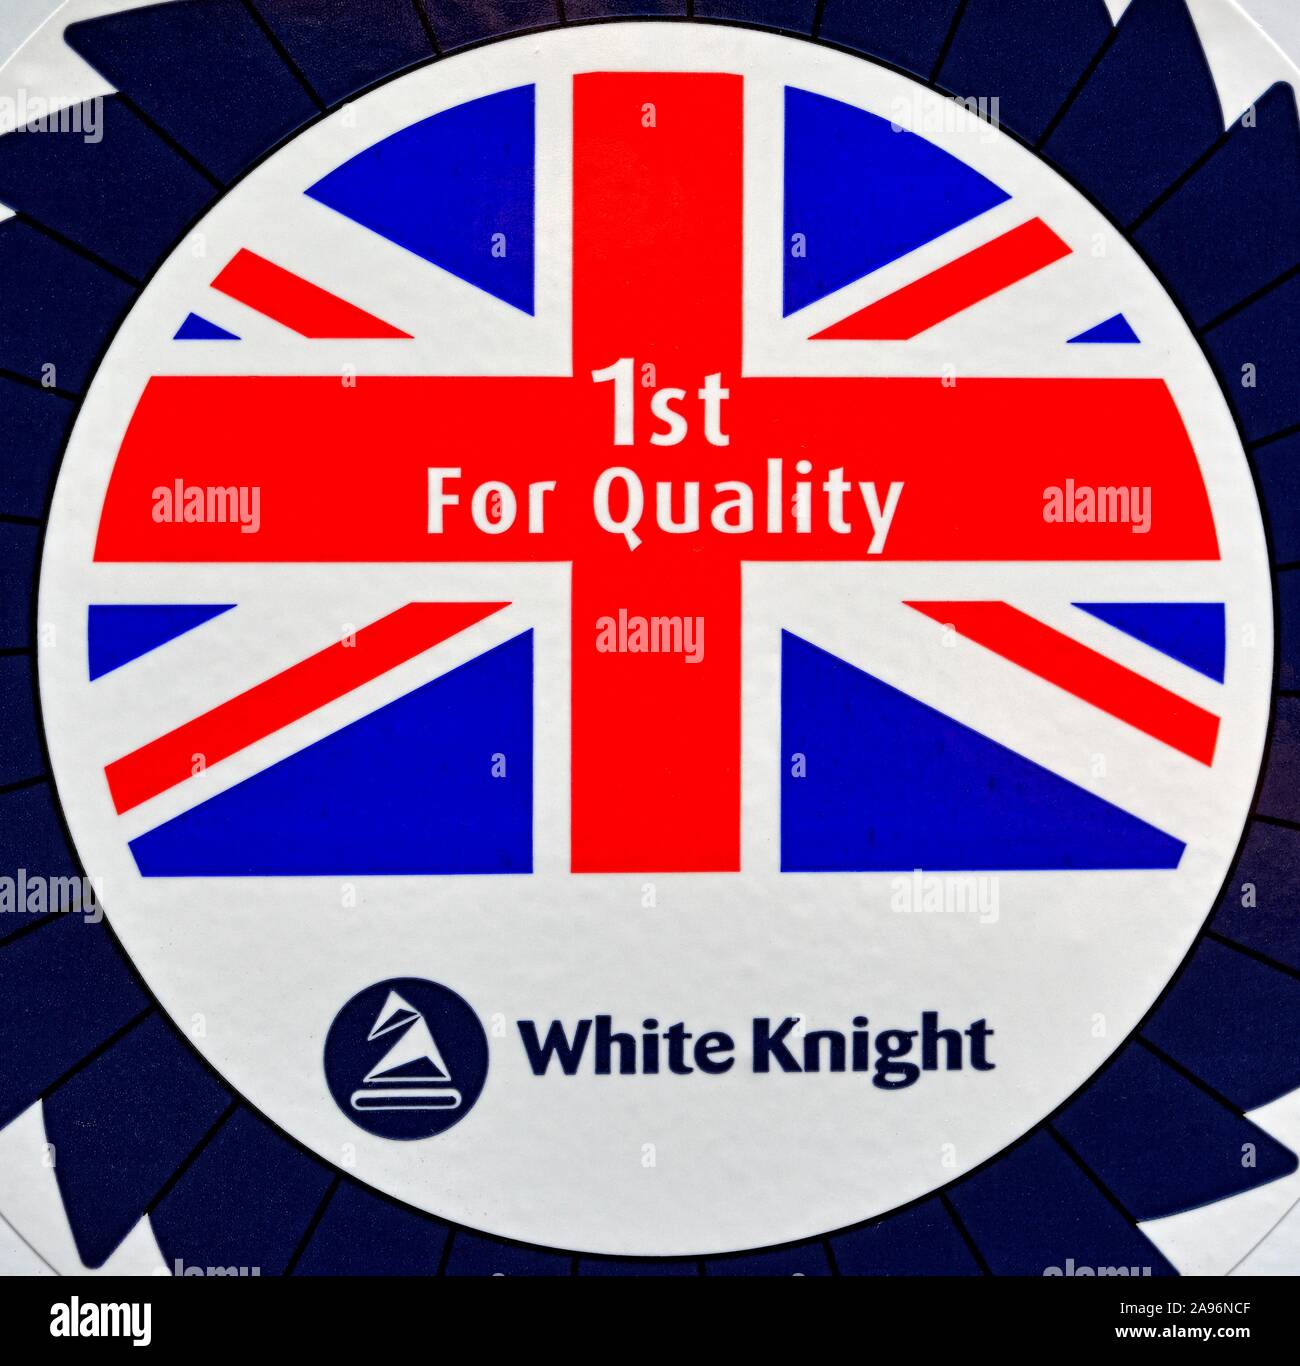 White Knight,British manufacturer of washing machines and dryers. 1st for quality union jack flag logo sticker. Stock Photo